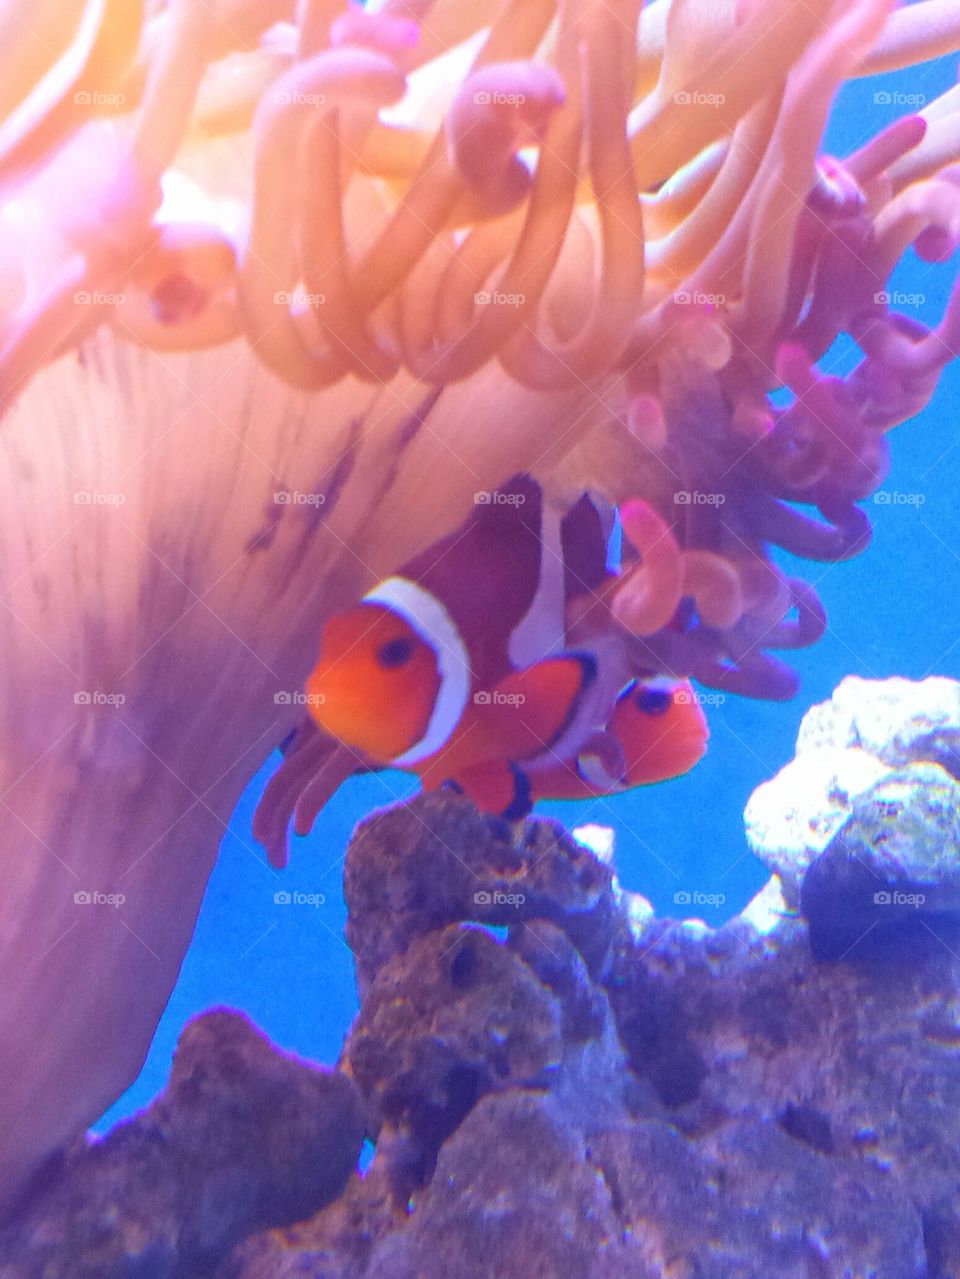 "Colorful Clownfish"